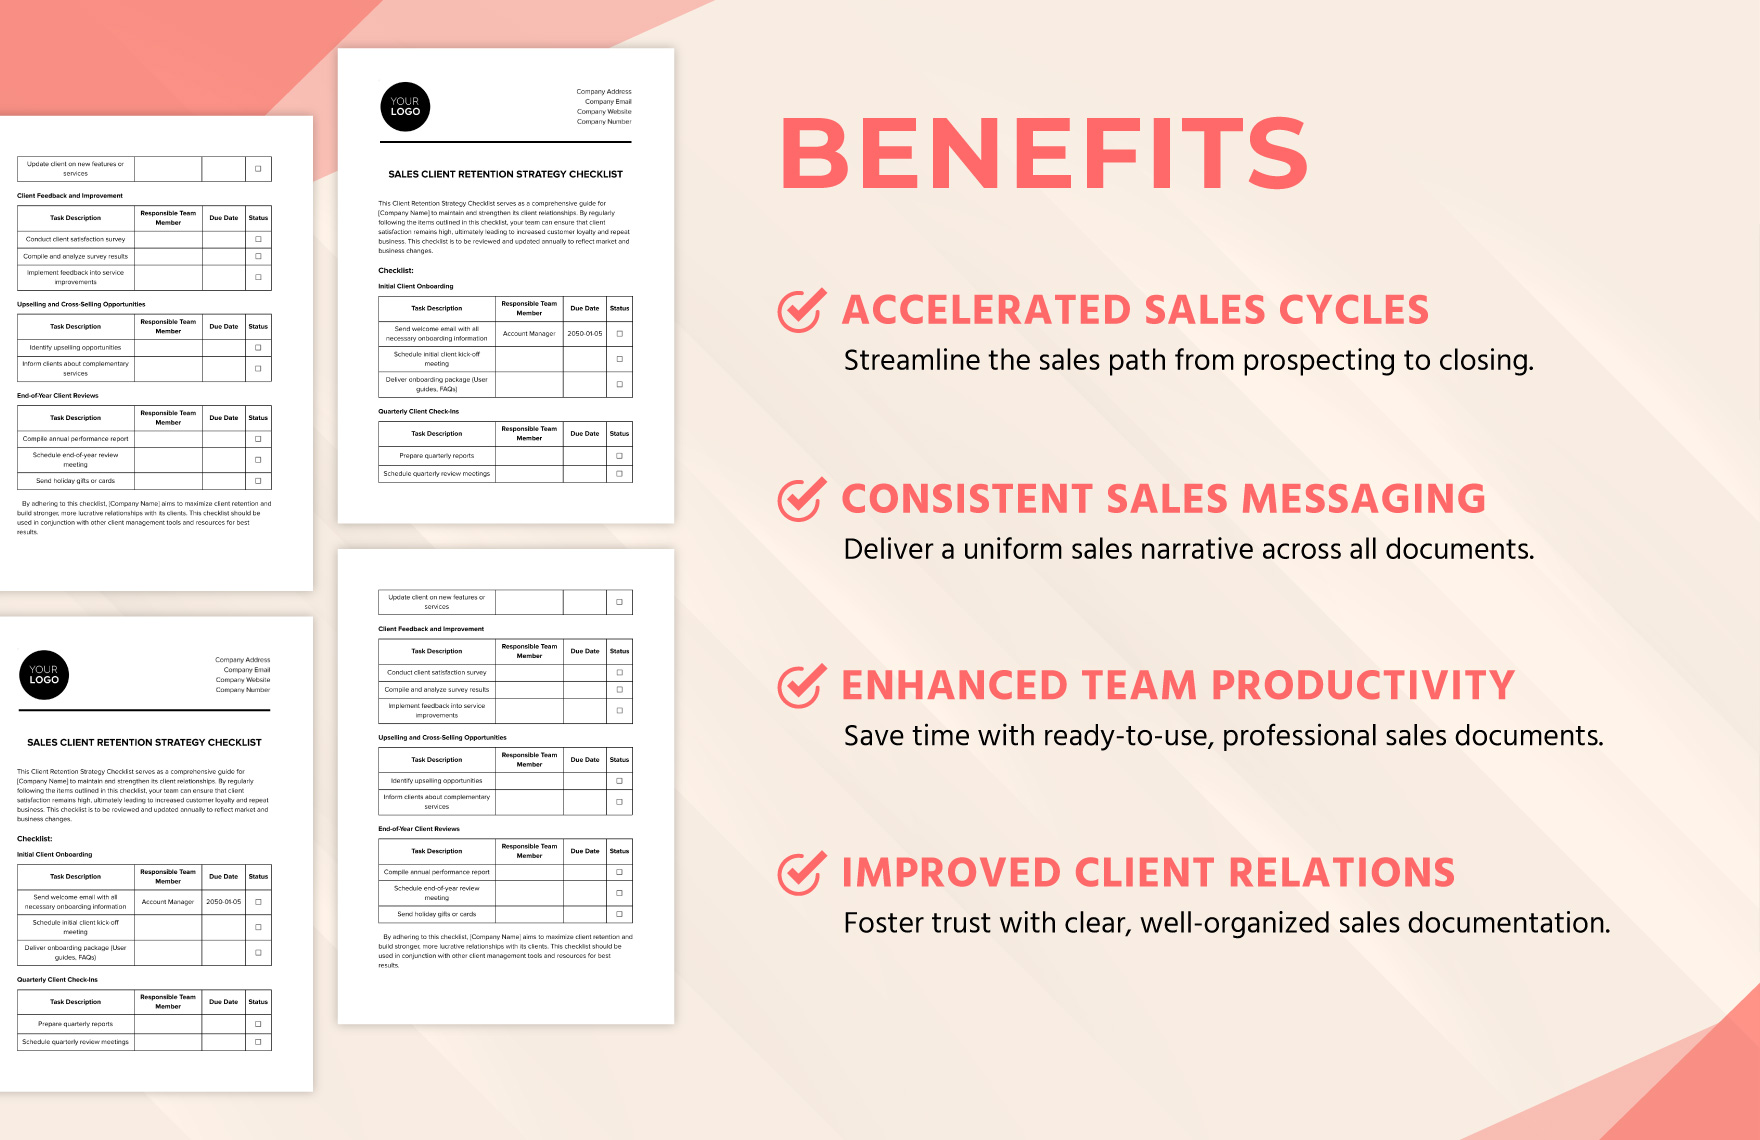 Sales Client Retention Strategy Checklist Template